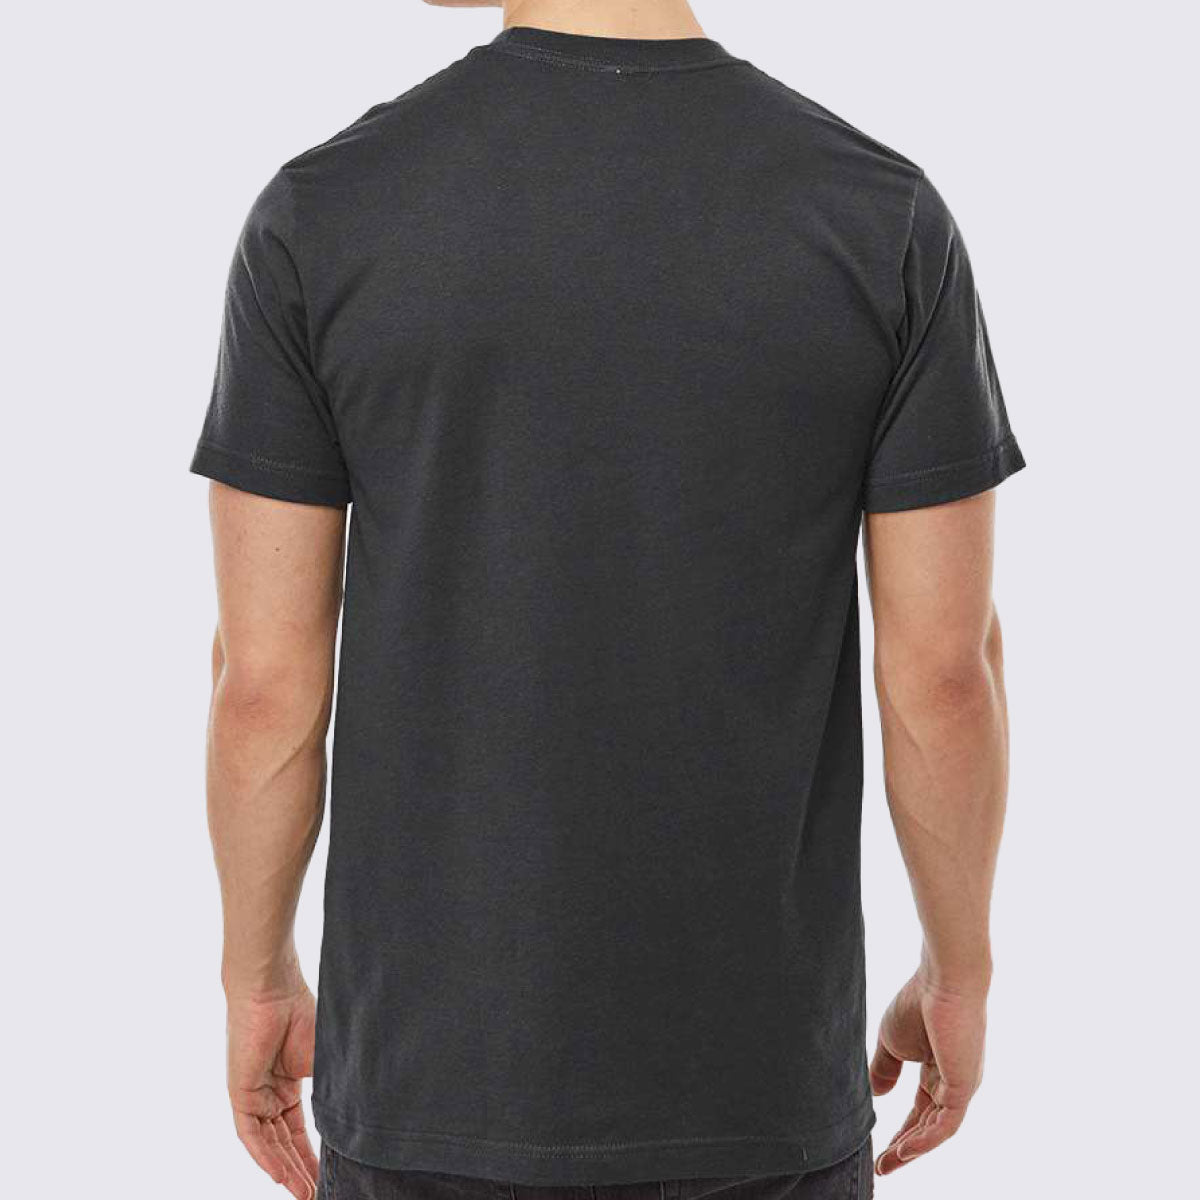 The Limit Does Not Exist Unisex Fine Jersey T-Shirt